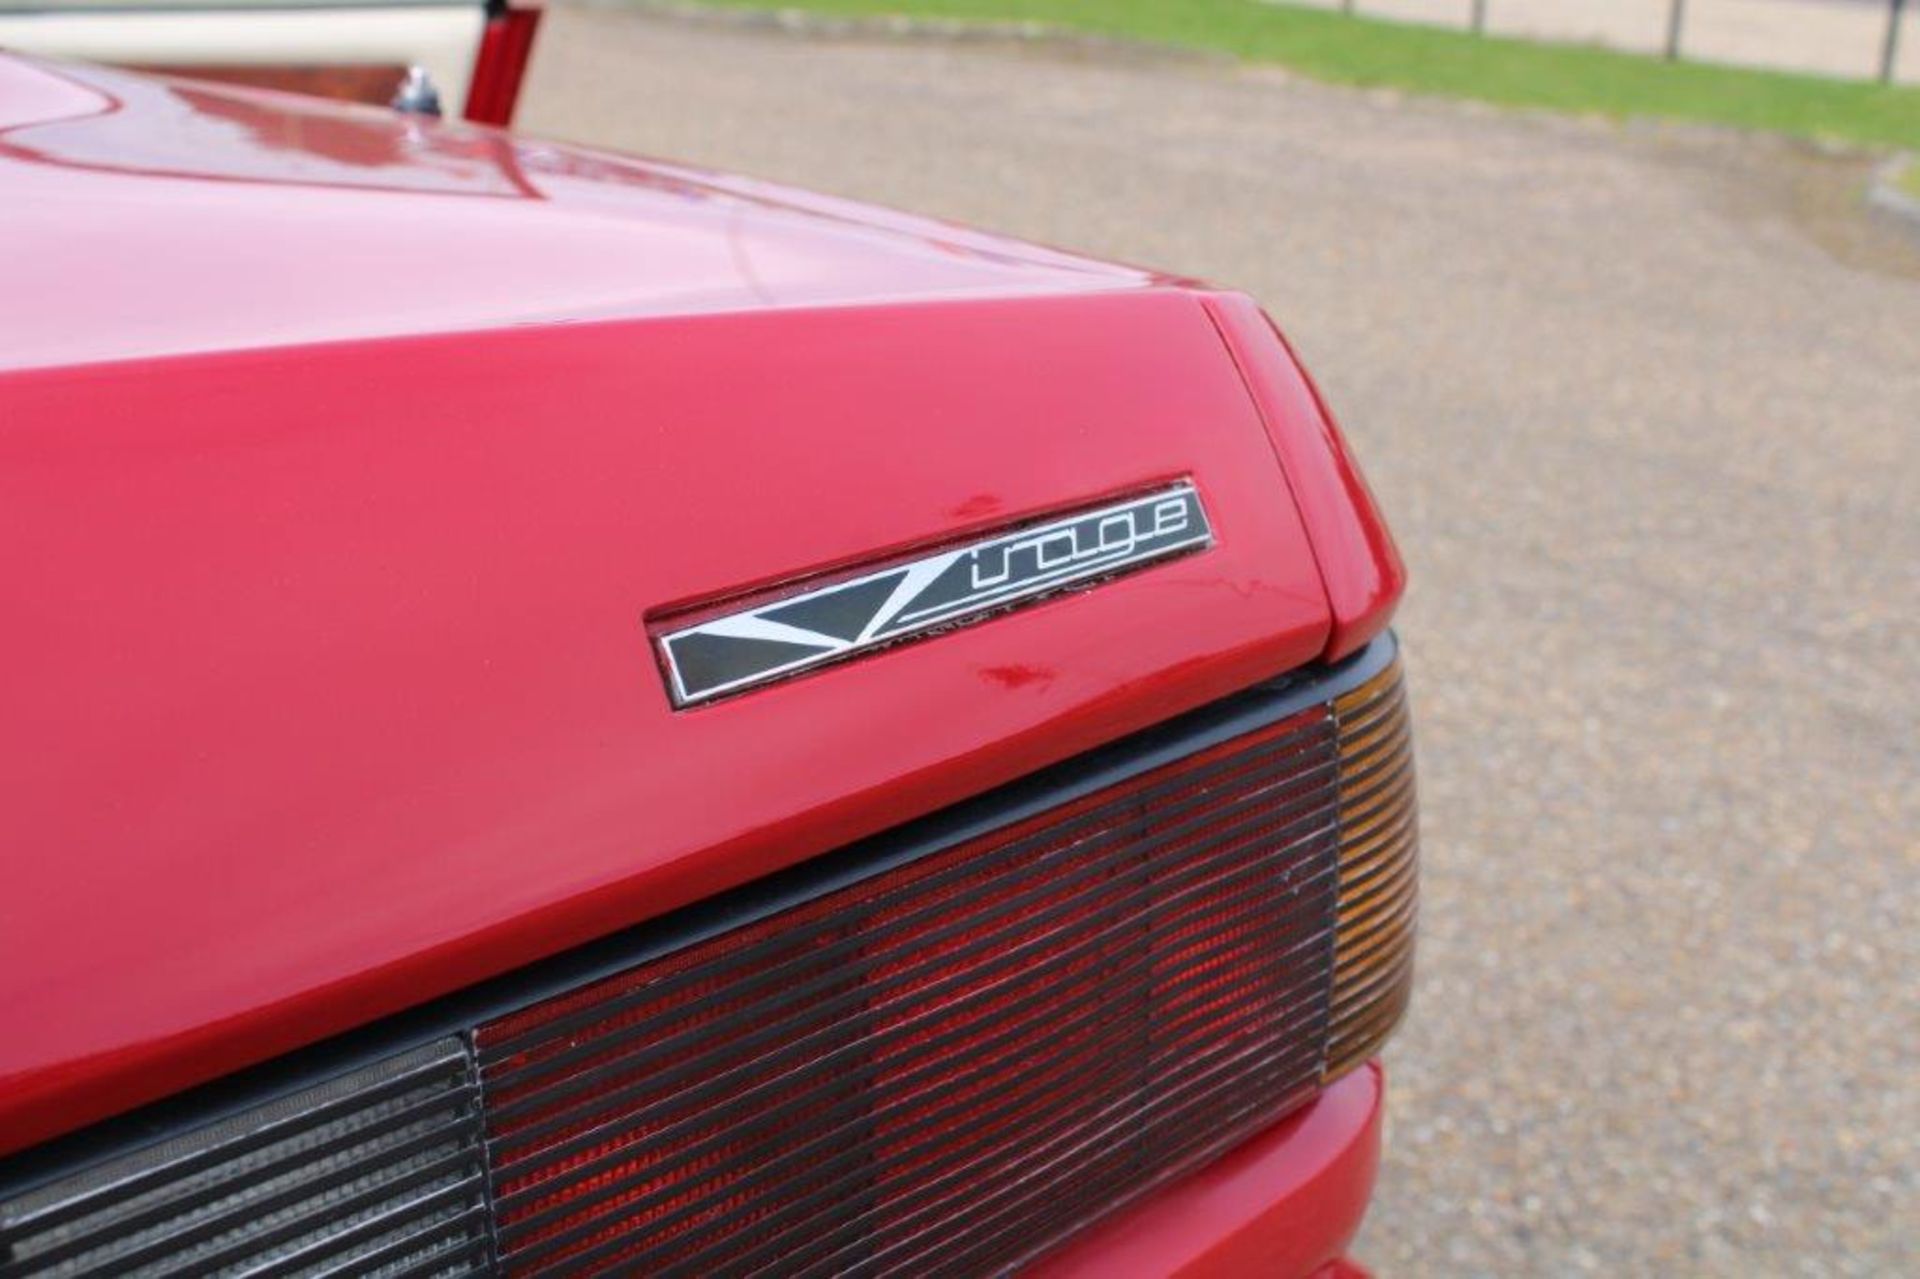 1992 Aston Martin Virage 5.3 V8 Auto - Image 8 of 20